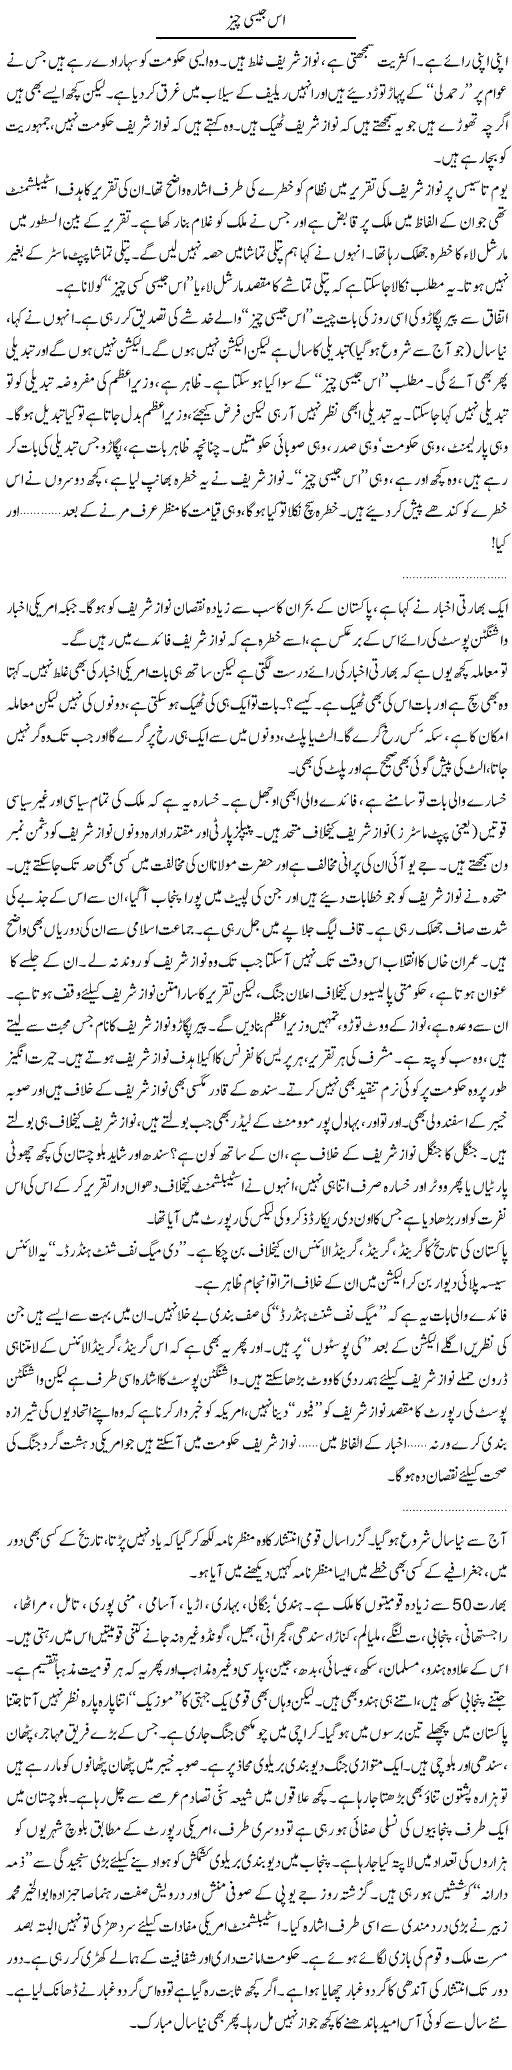 Thing Like This Express Column Abdullah Tariq 1 January 2011